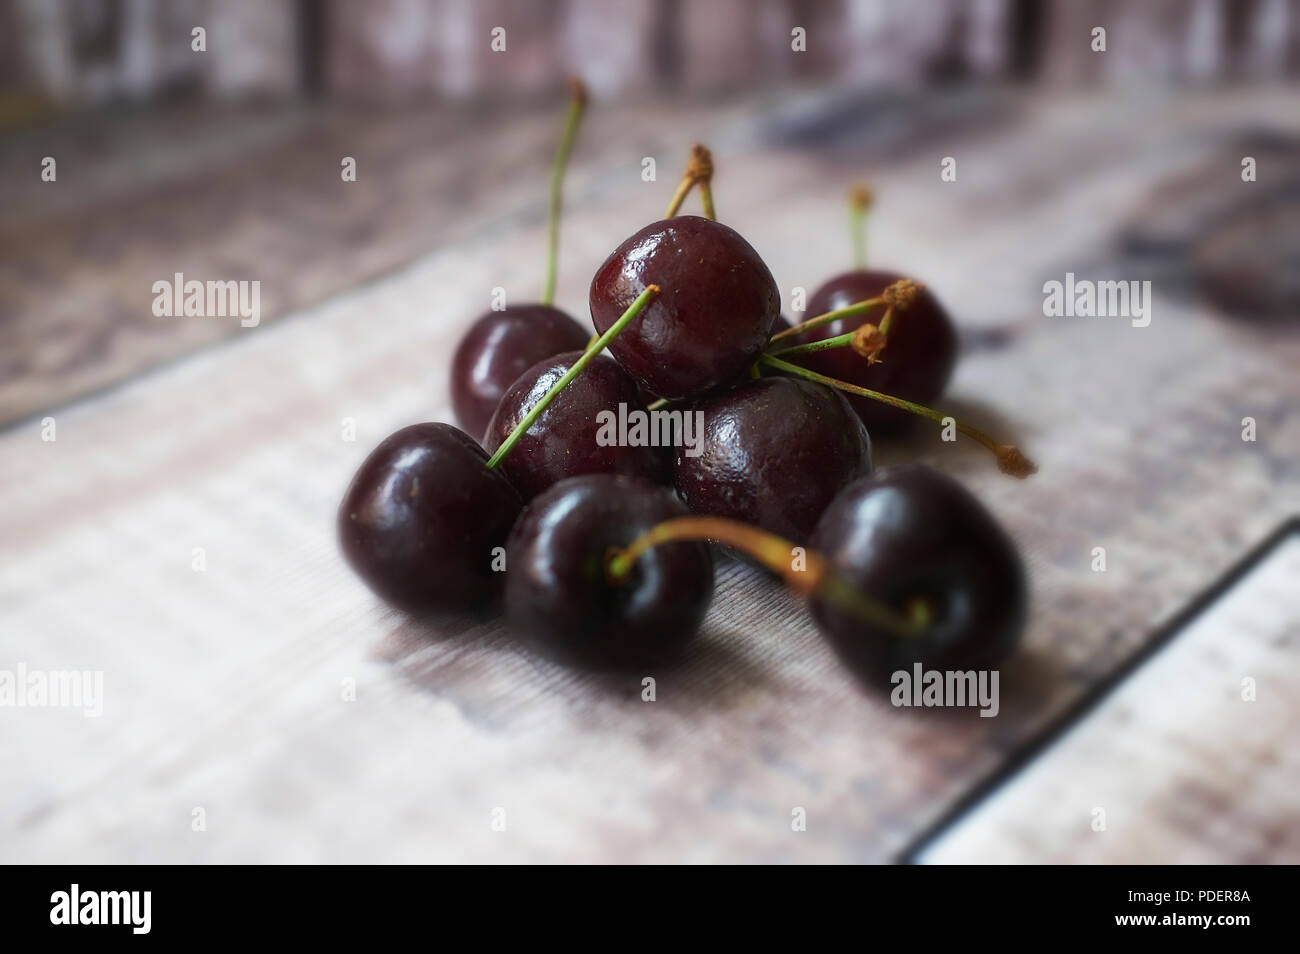 Appetising fresh Morello Cherries on wooden table top Stock Photo